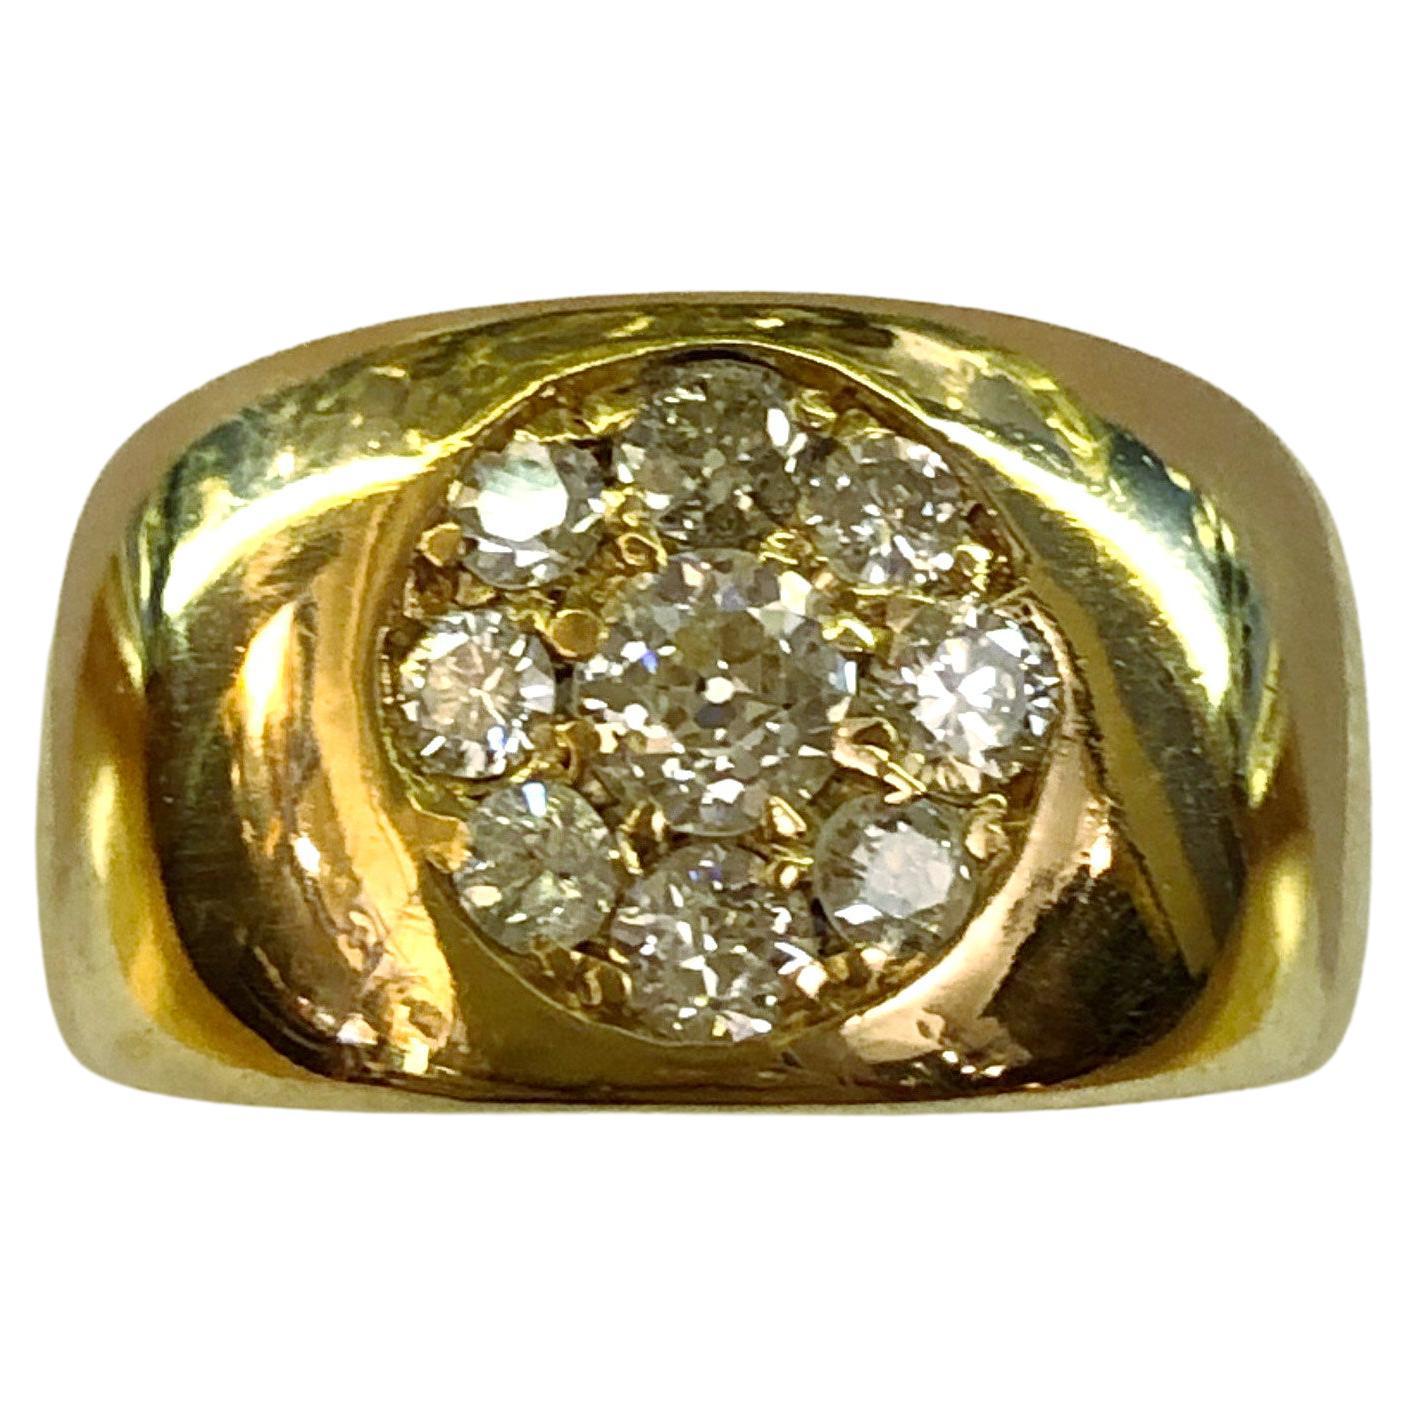 18 Karat Yellow Gold and Diamond Ring